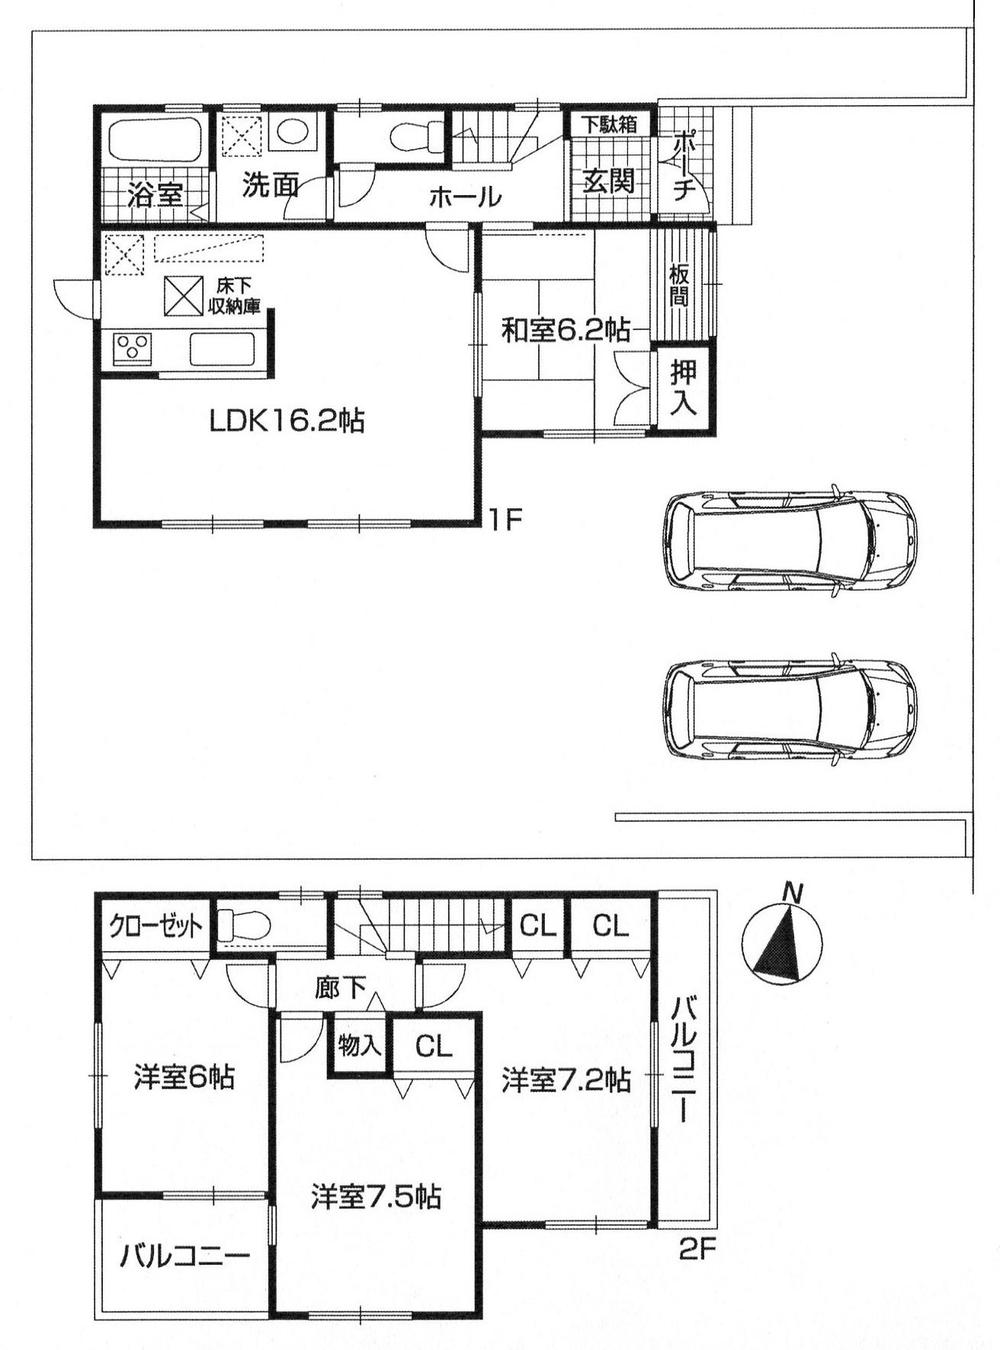 Floor plan. Price 28.5 million yen, 4LDK, Land area 180.43 sq m , Building area 98.42 sq m